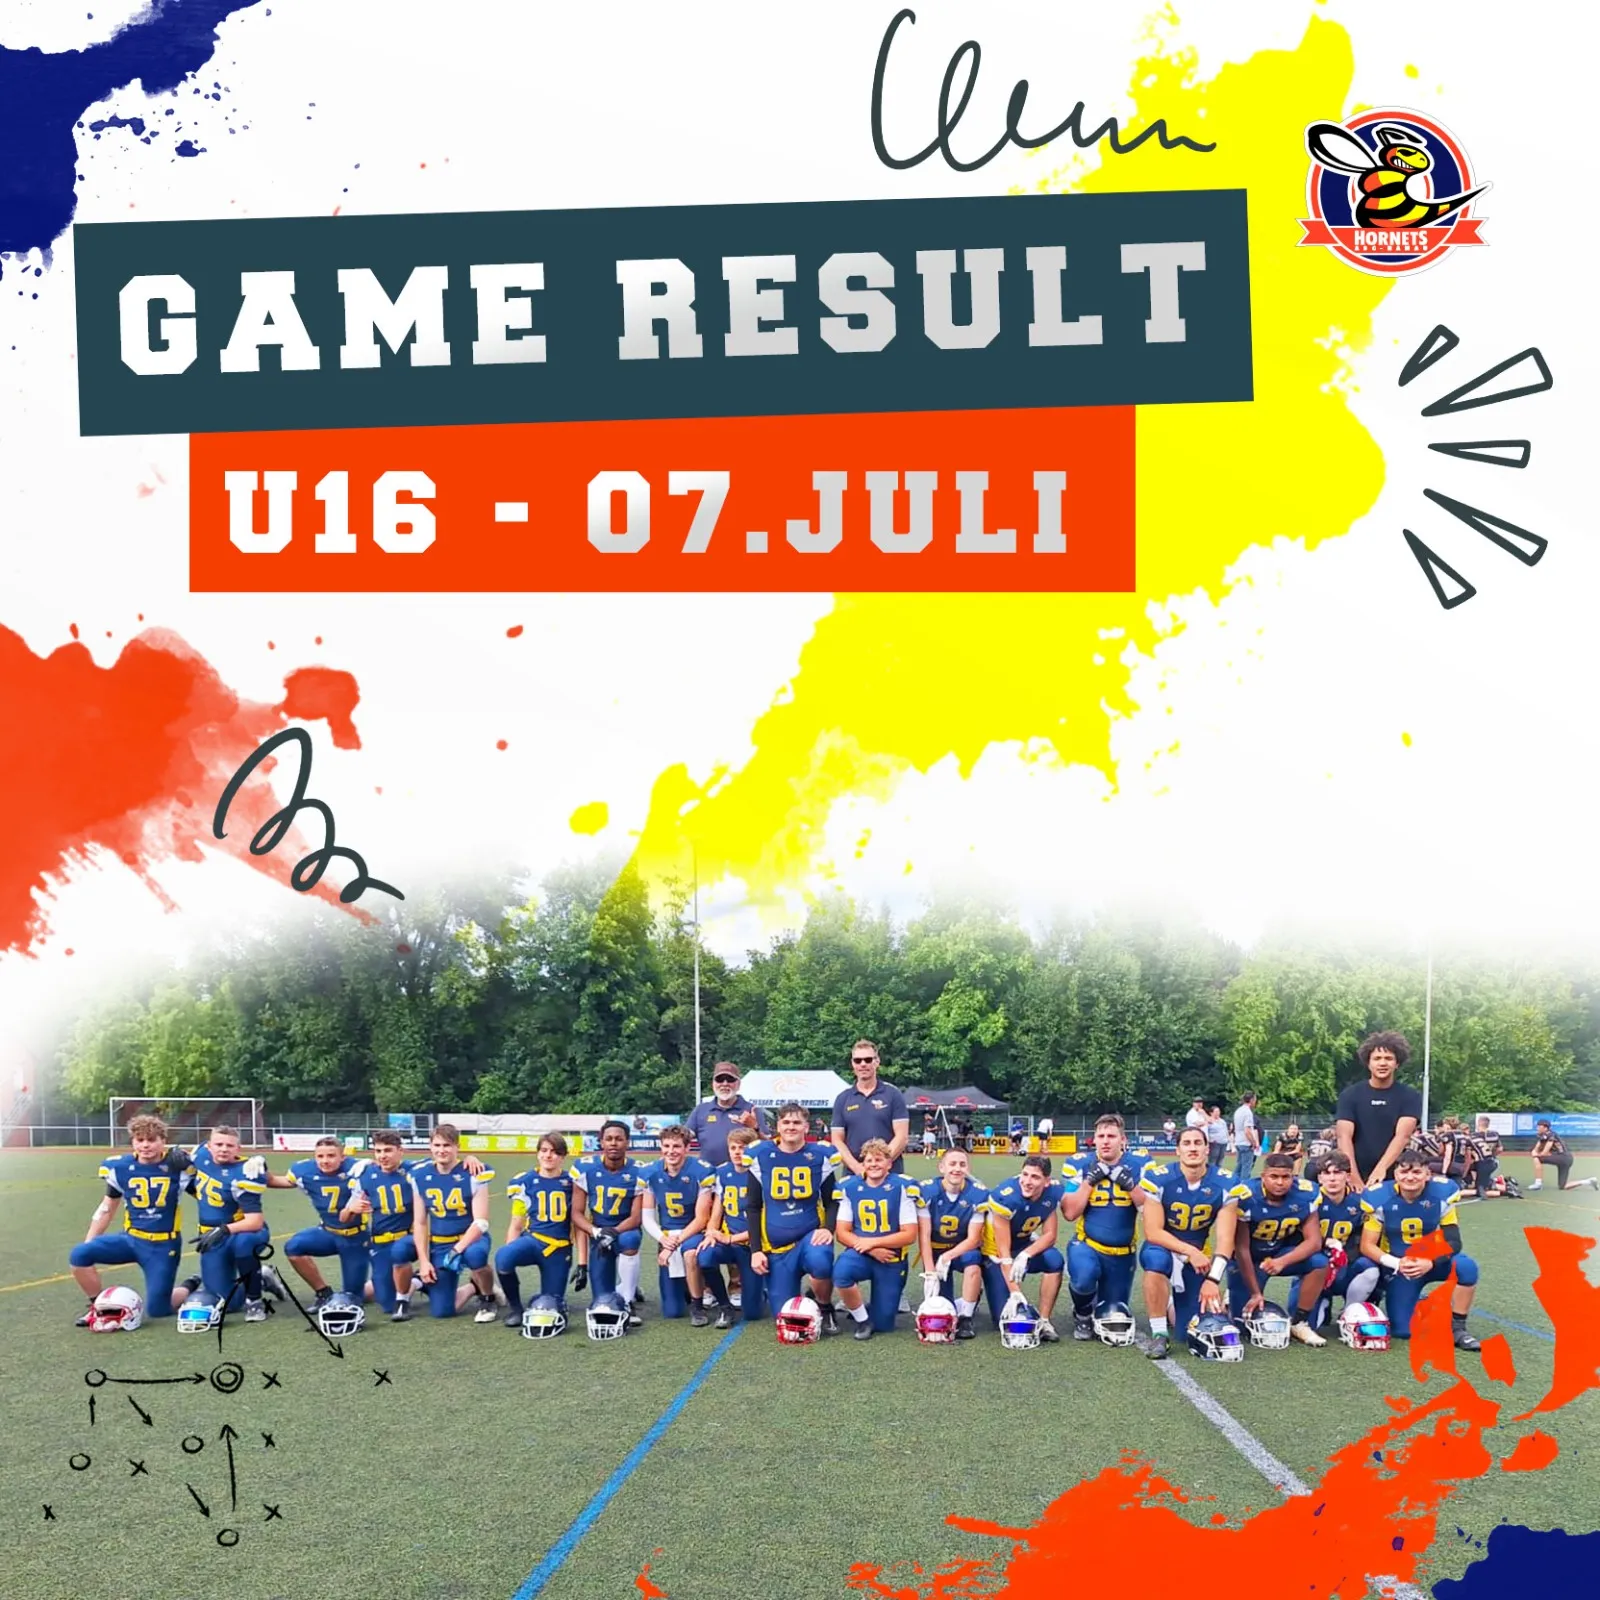 Game Result - U16 - 07. Juli